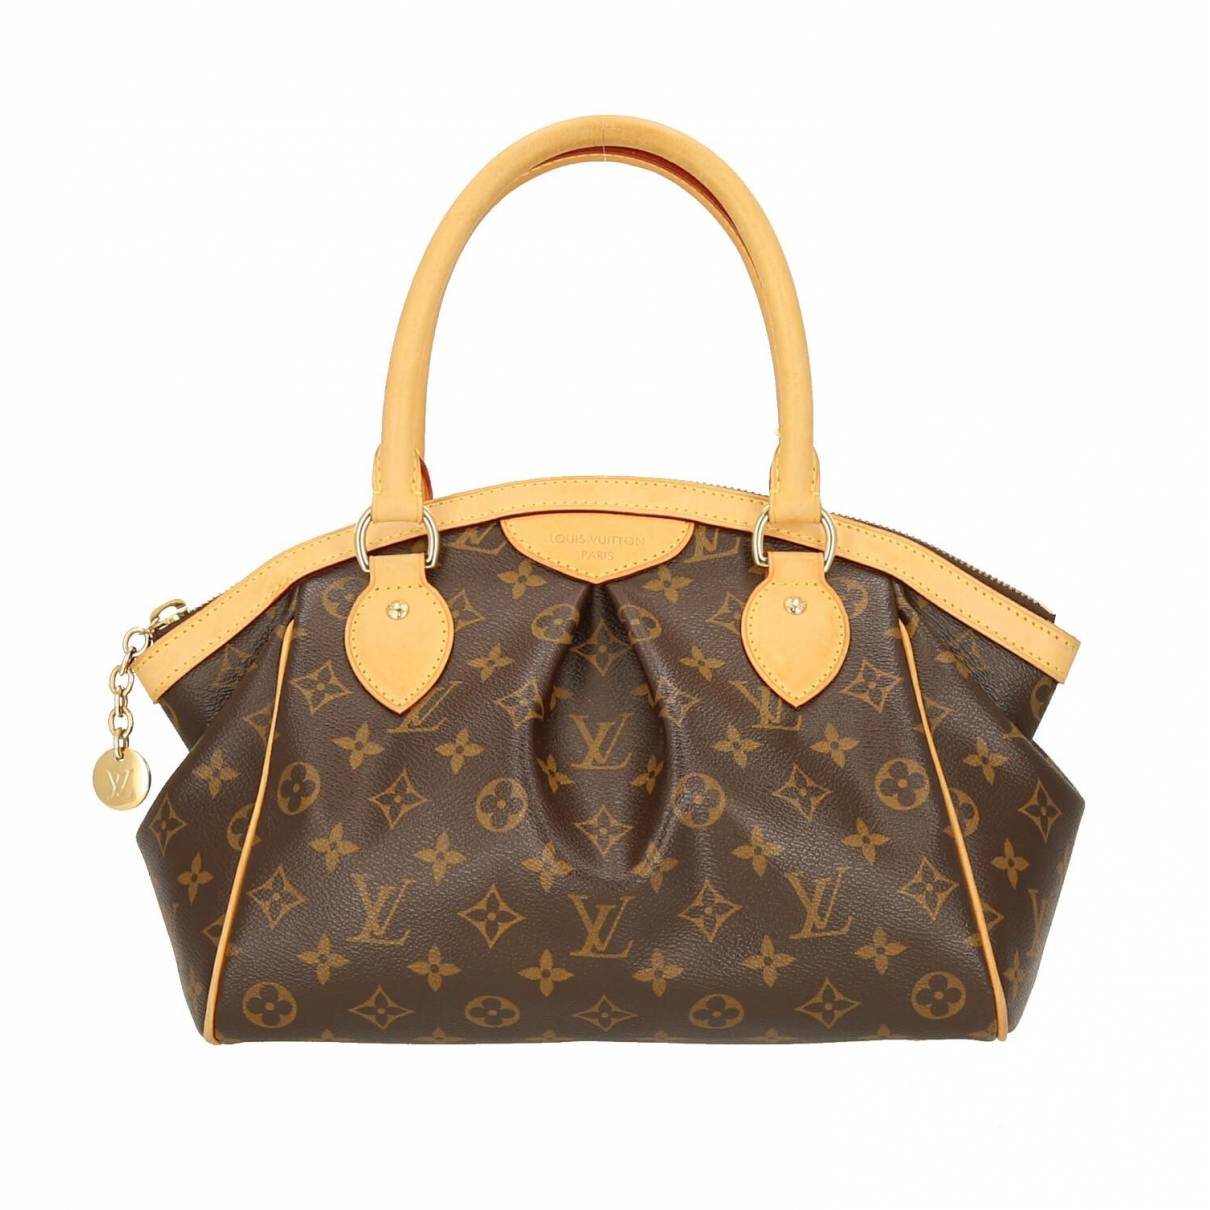 Louis Vuitton Neverfull MM Hand Bag Code TH0077